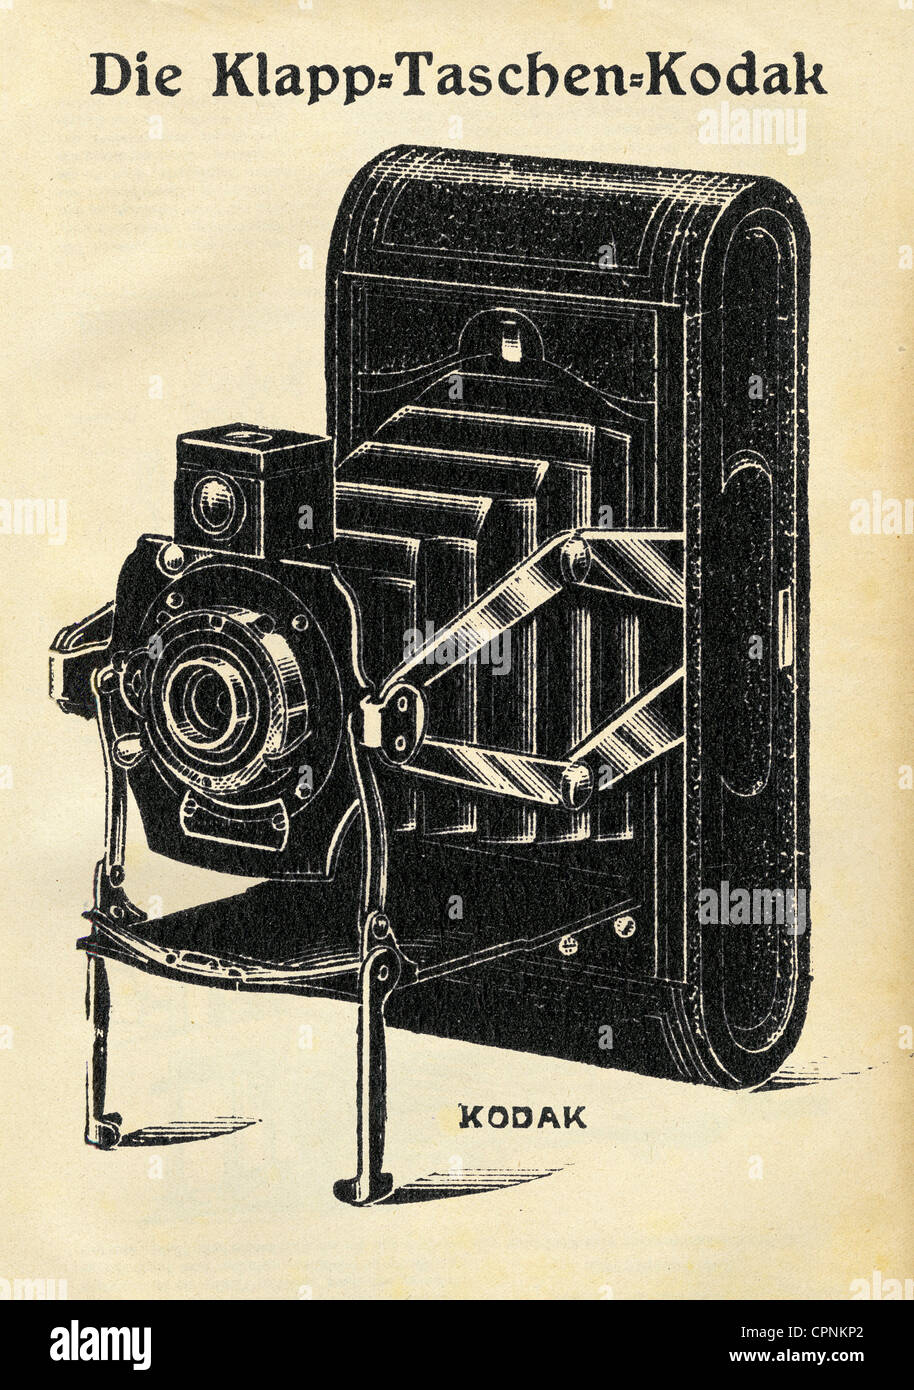 Fotografie, Kameras, Kodak Kamera, Falttasche Kodak, Bildgröße: 6 x 9 cm, Kosten damals in Deutschland: 43 Mark, Kamerahersteller: Eastmann Kodak Co., Rochester, N.Y., USA, 1914, Additional-Rights-Clearences-not available Stockfoto